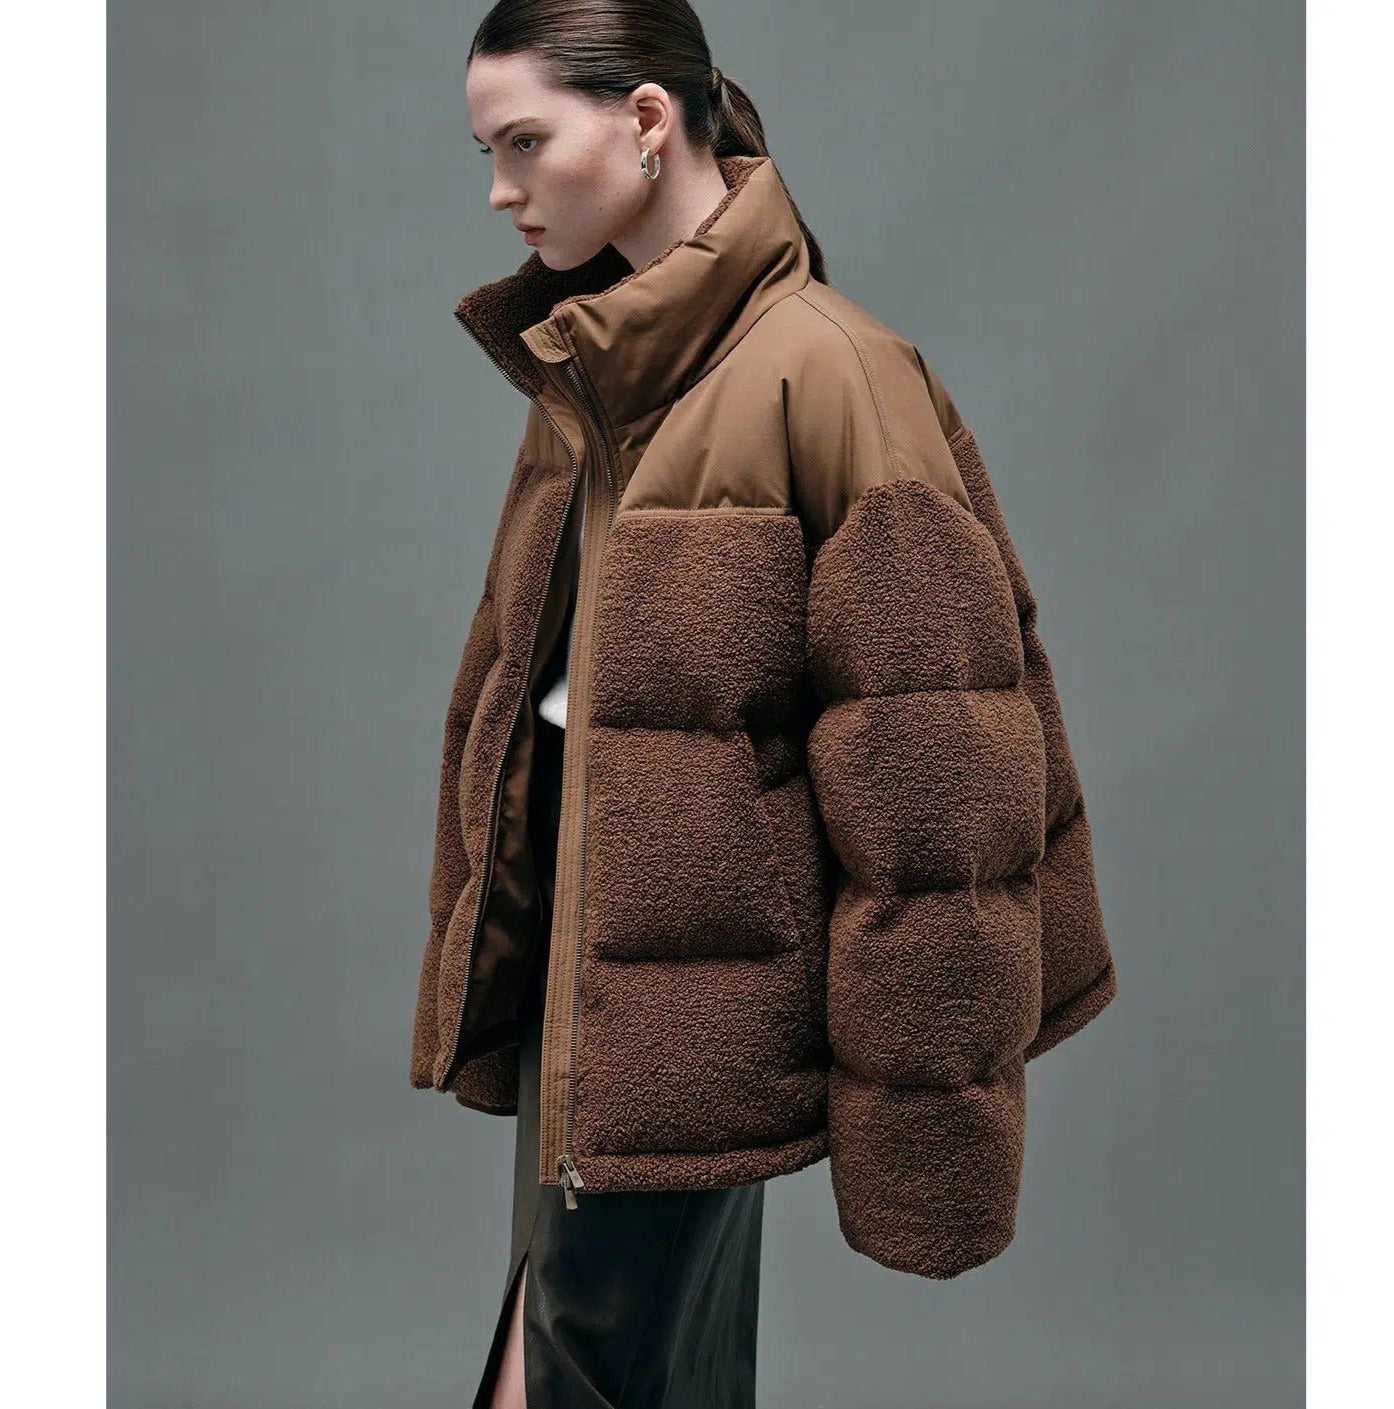 Sherpa Spliced Down Jacket Korean Street Fashion Jacket By NANS Shop Online at OH Vault